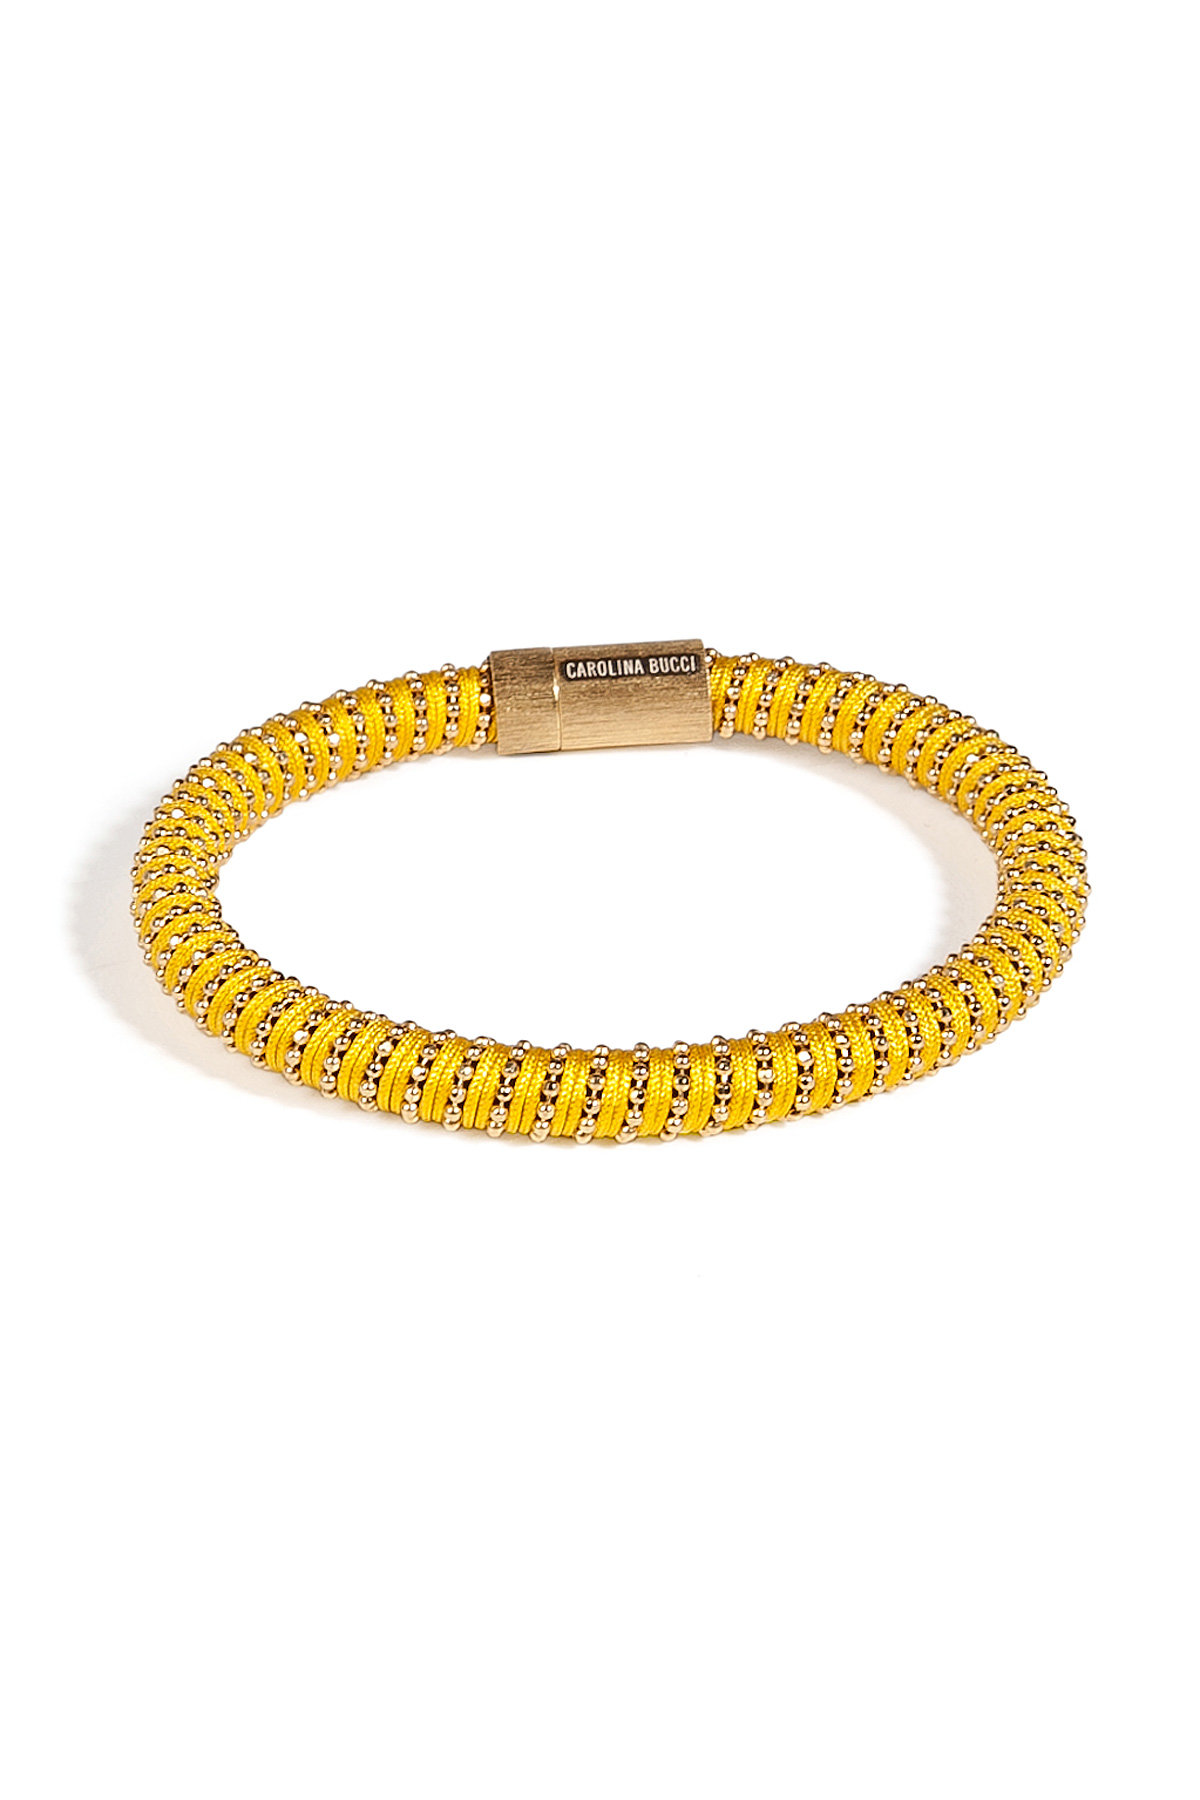 Carolina Bucci - Gold-Plated Twister Bracelet in Yellow